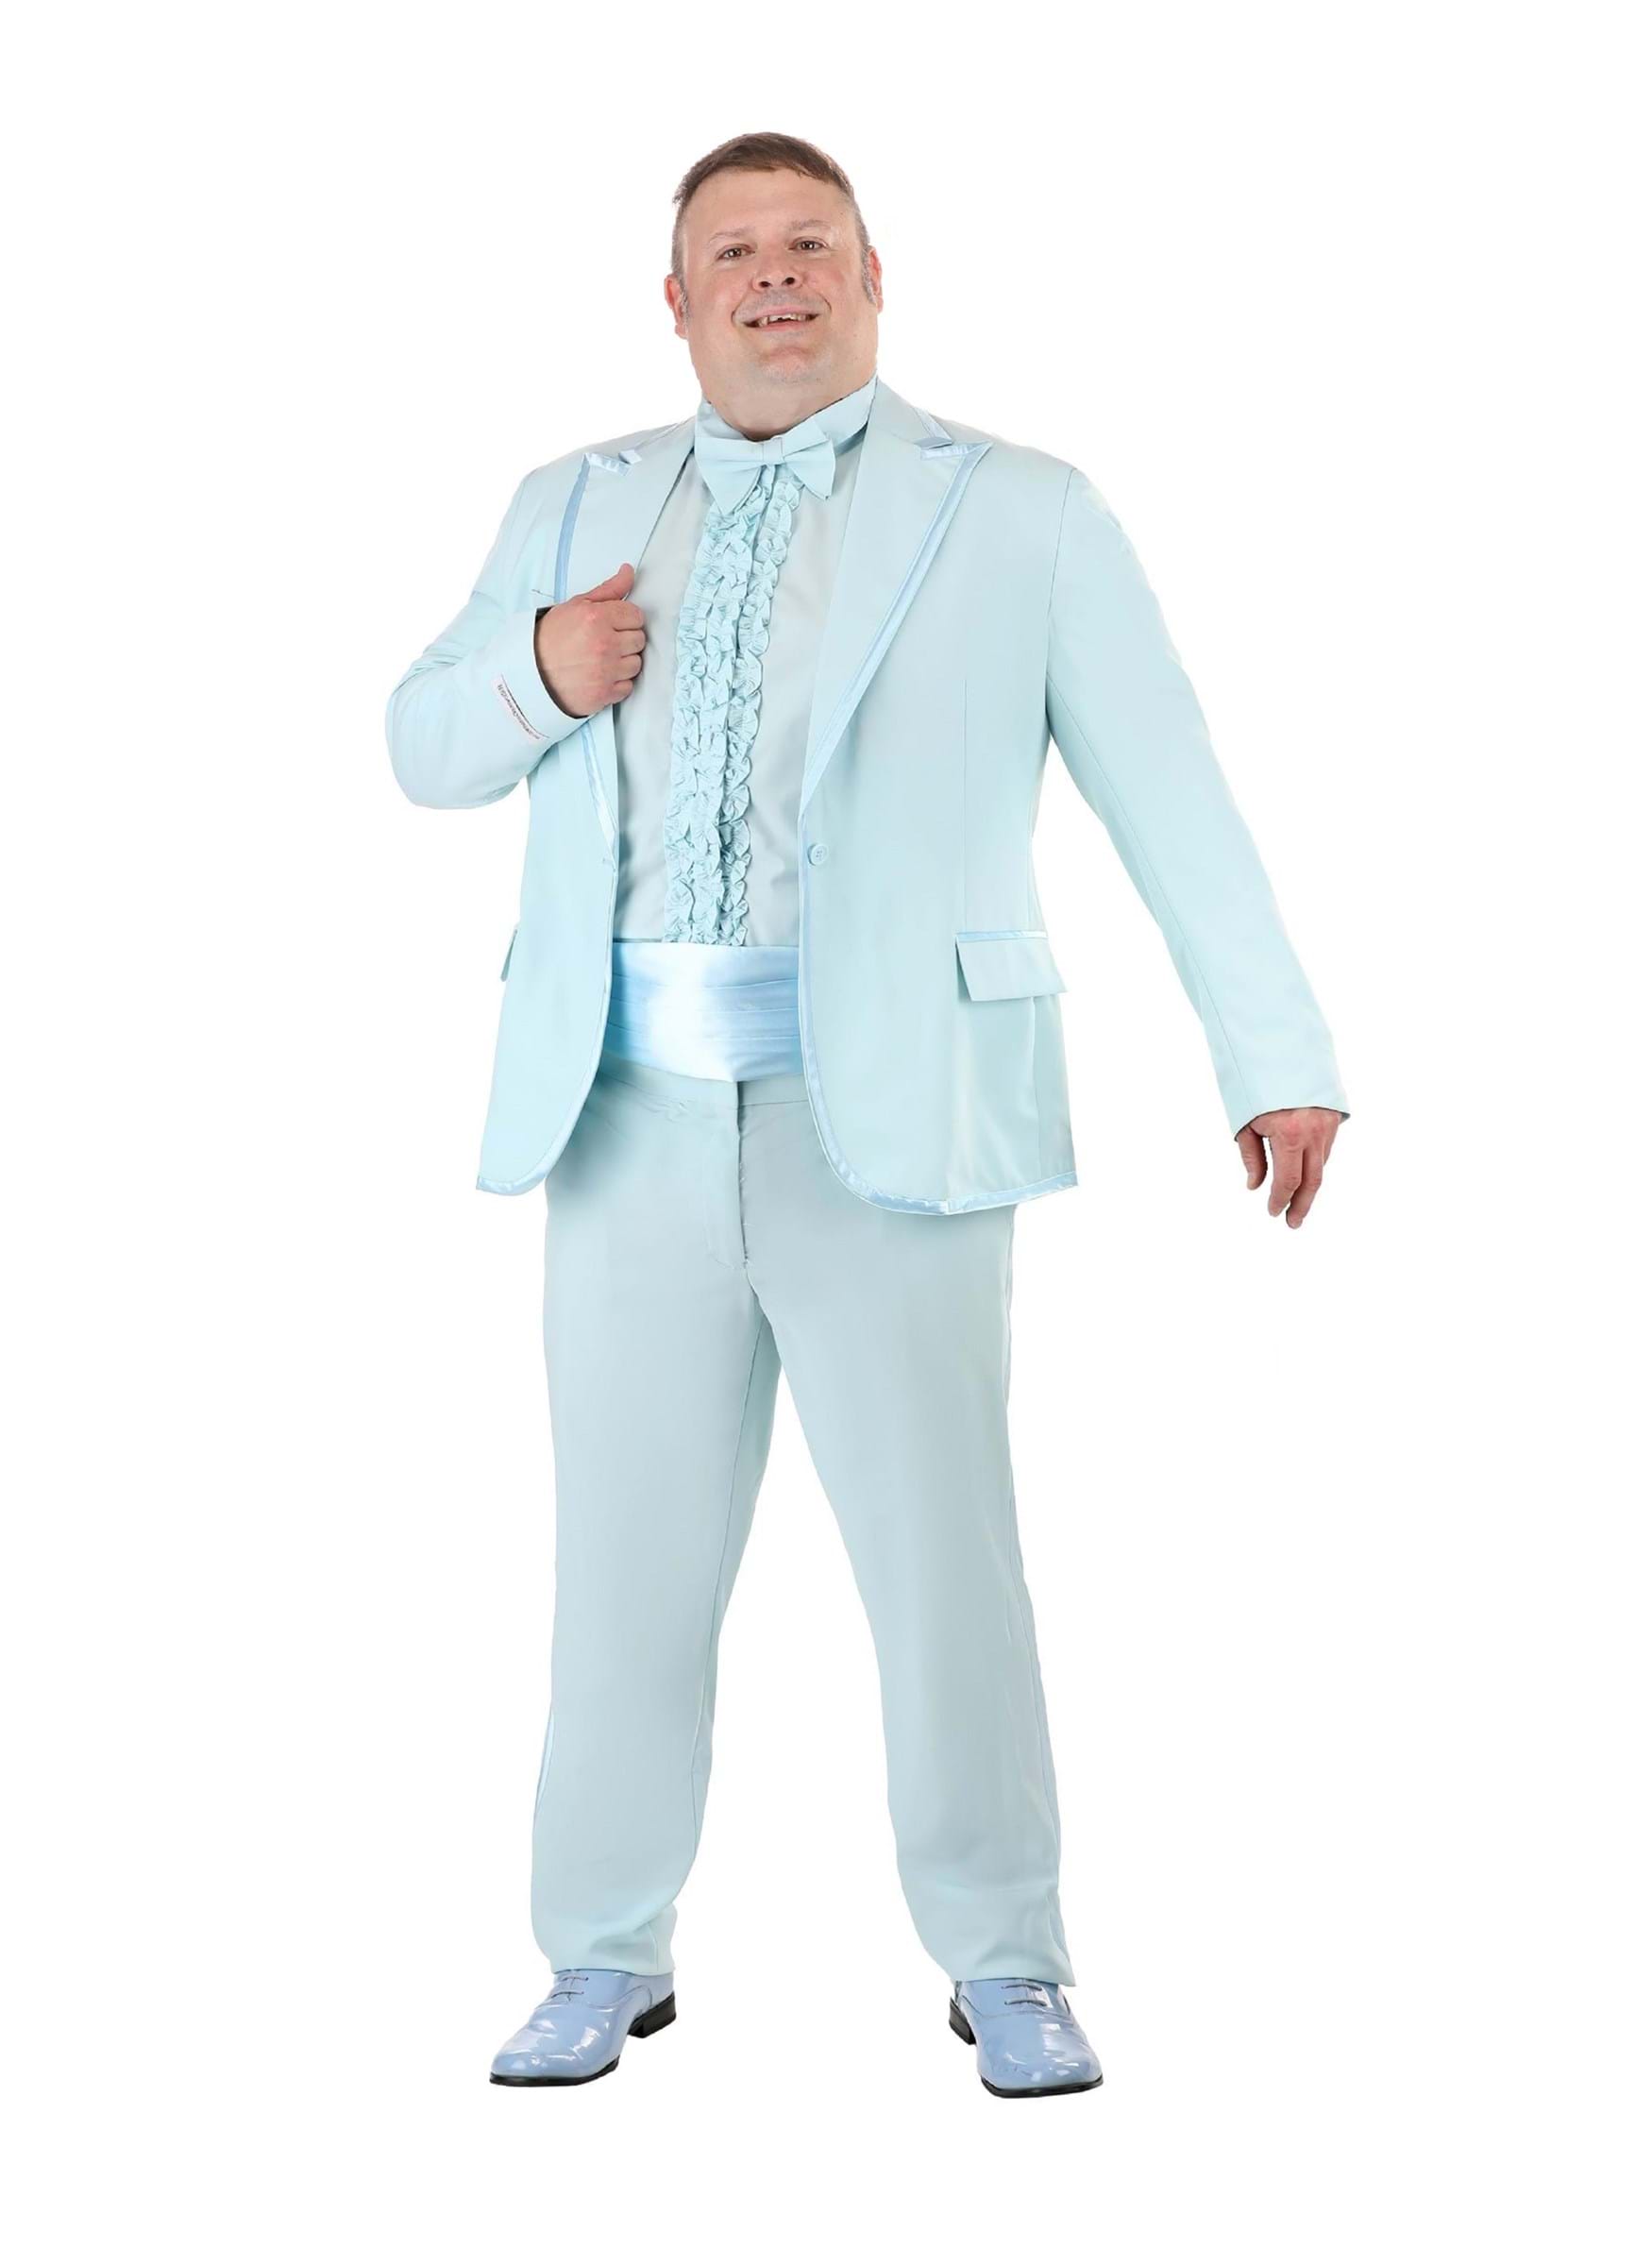 Plus Size Men's Powder Blue Tuxedo Costume , Plus Size Costumes